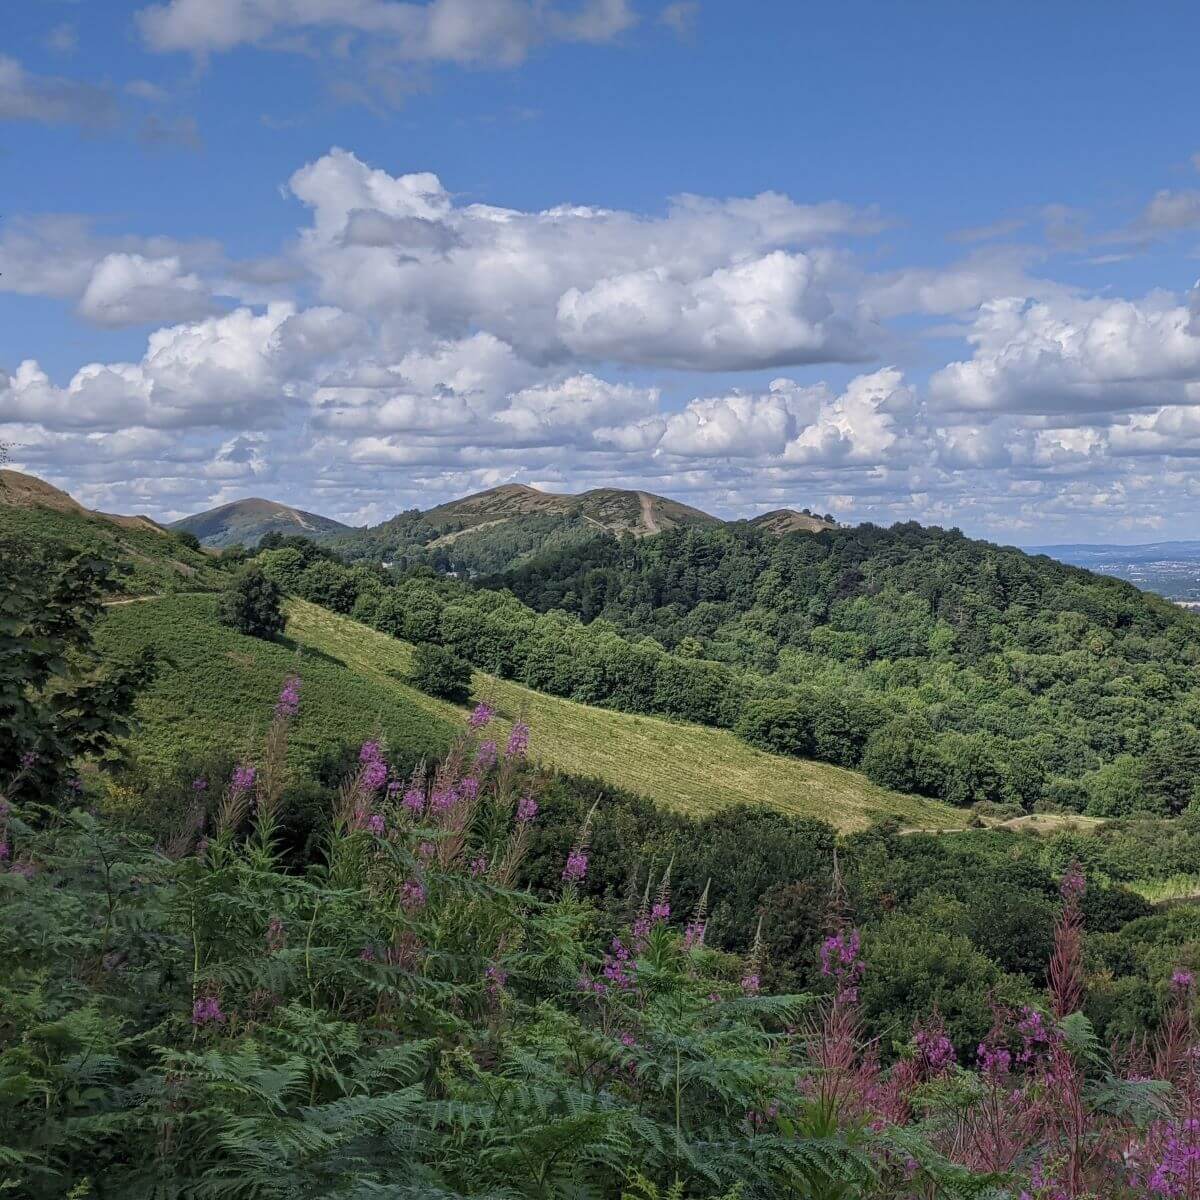 The Malvern Hills ridge in full greenery against blue sky